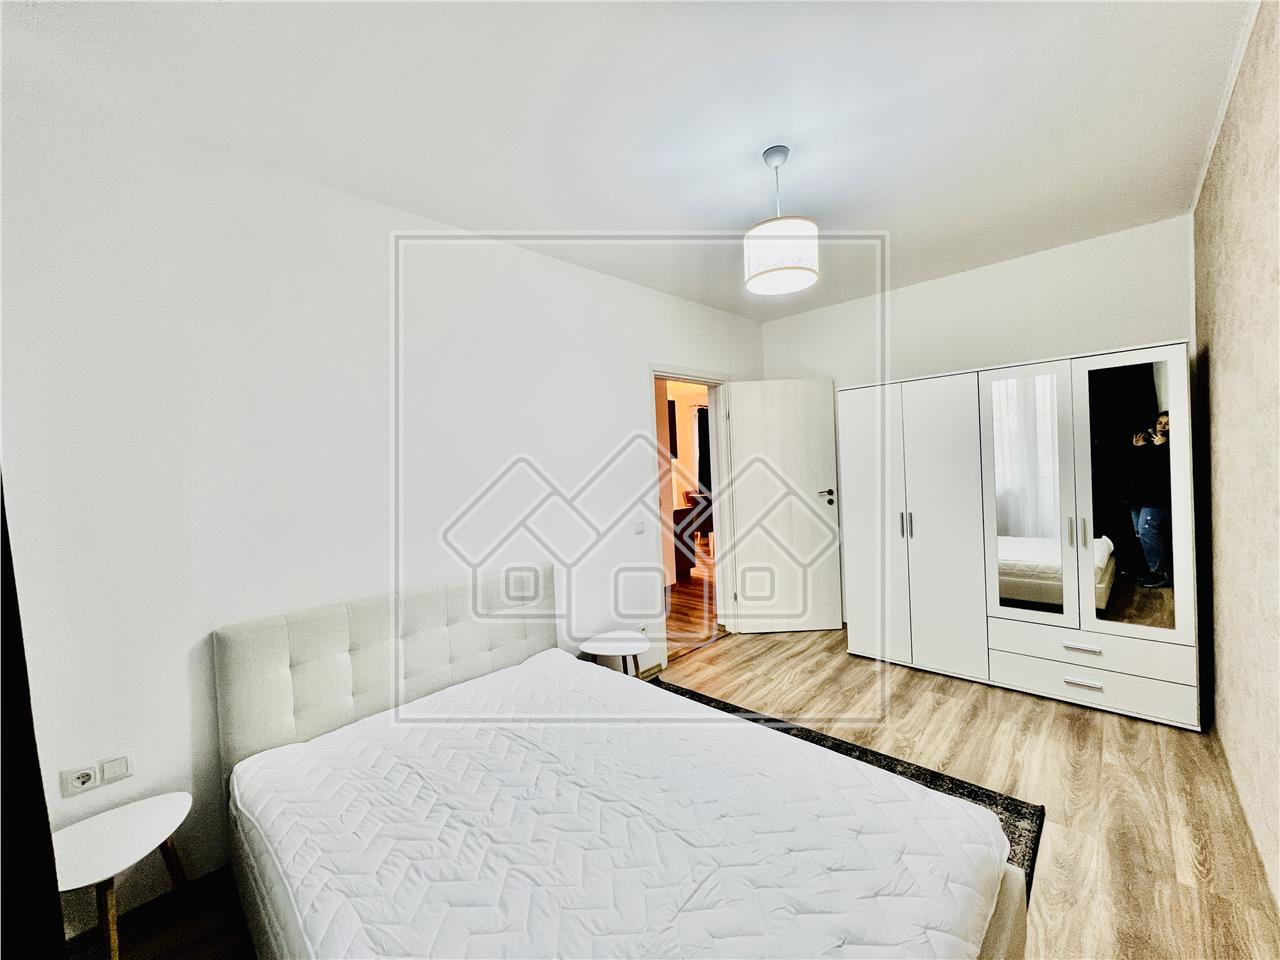 Apartament de inchiriat in Sibiu-NOU 3 camere, 2 balcoane, loc parcare